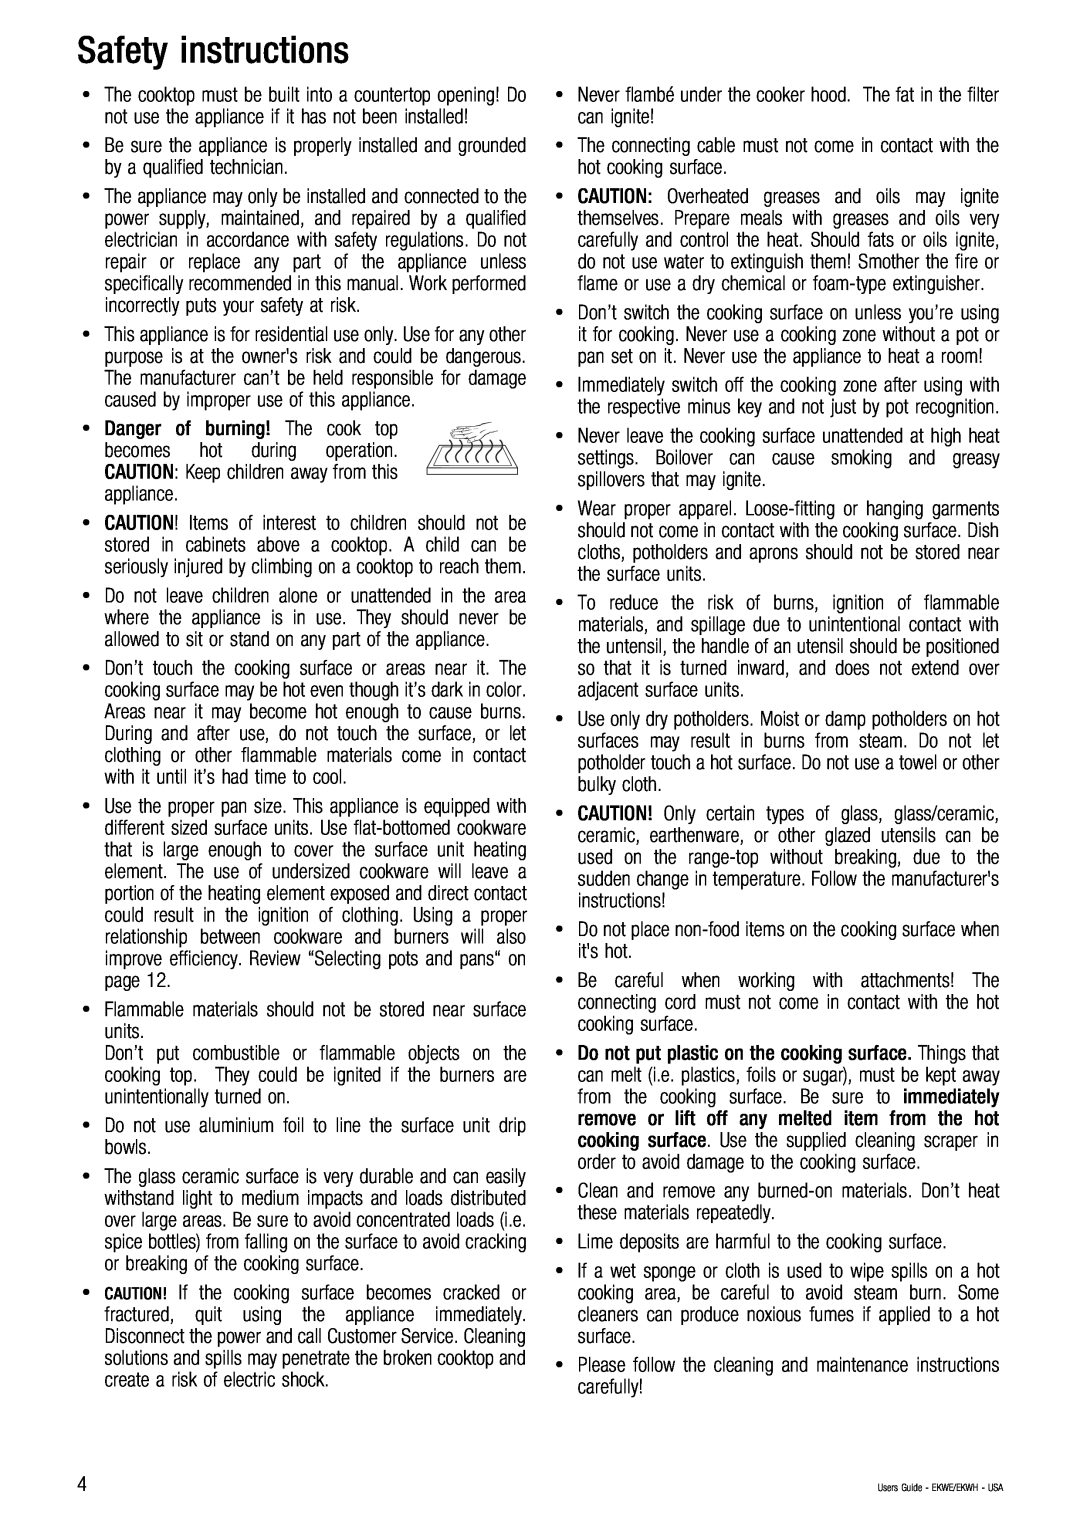 Kuppersbusch USA EKWH, EKWE manual Safety instructions 